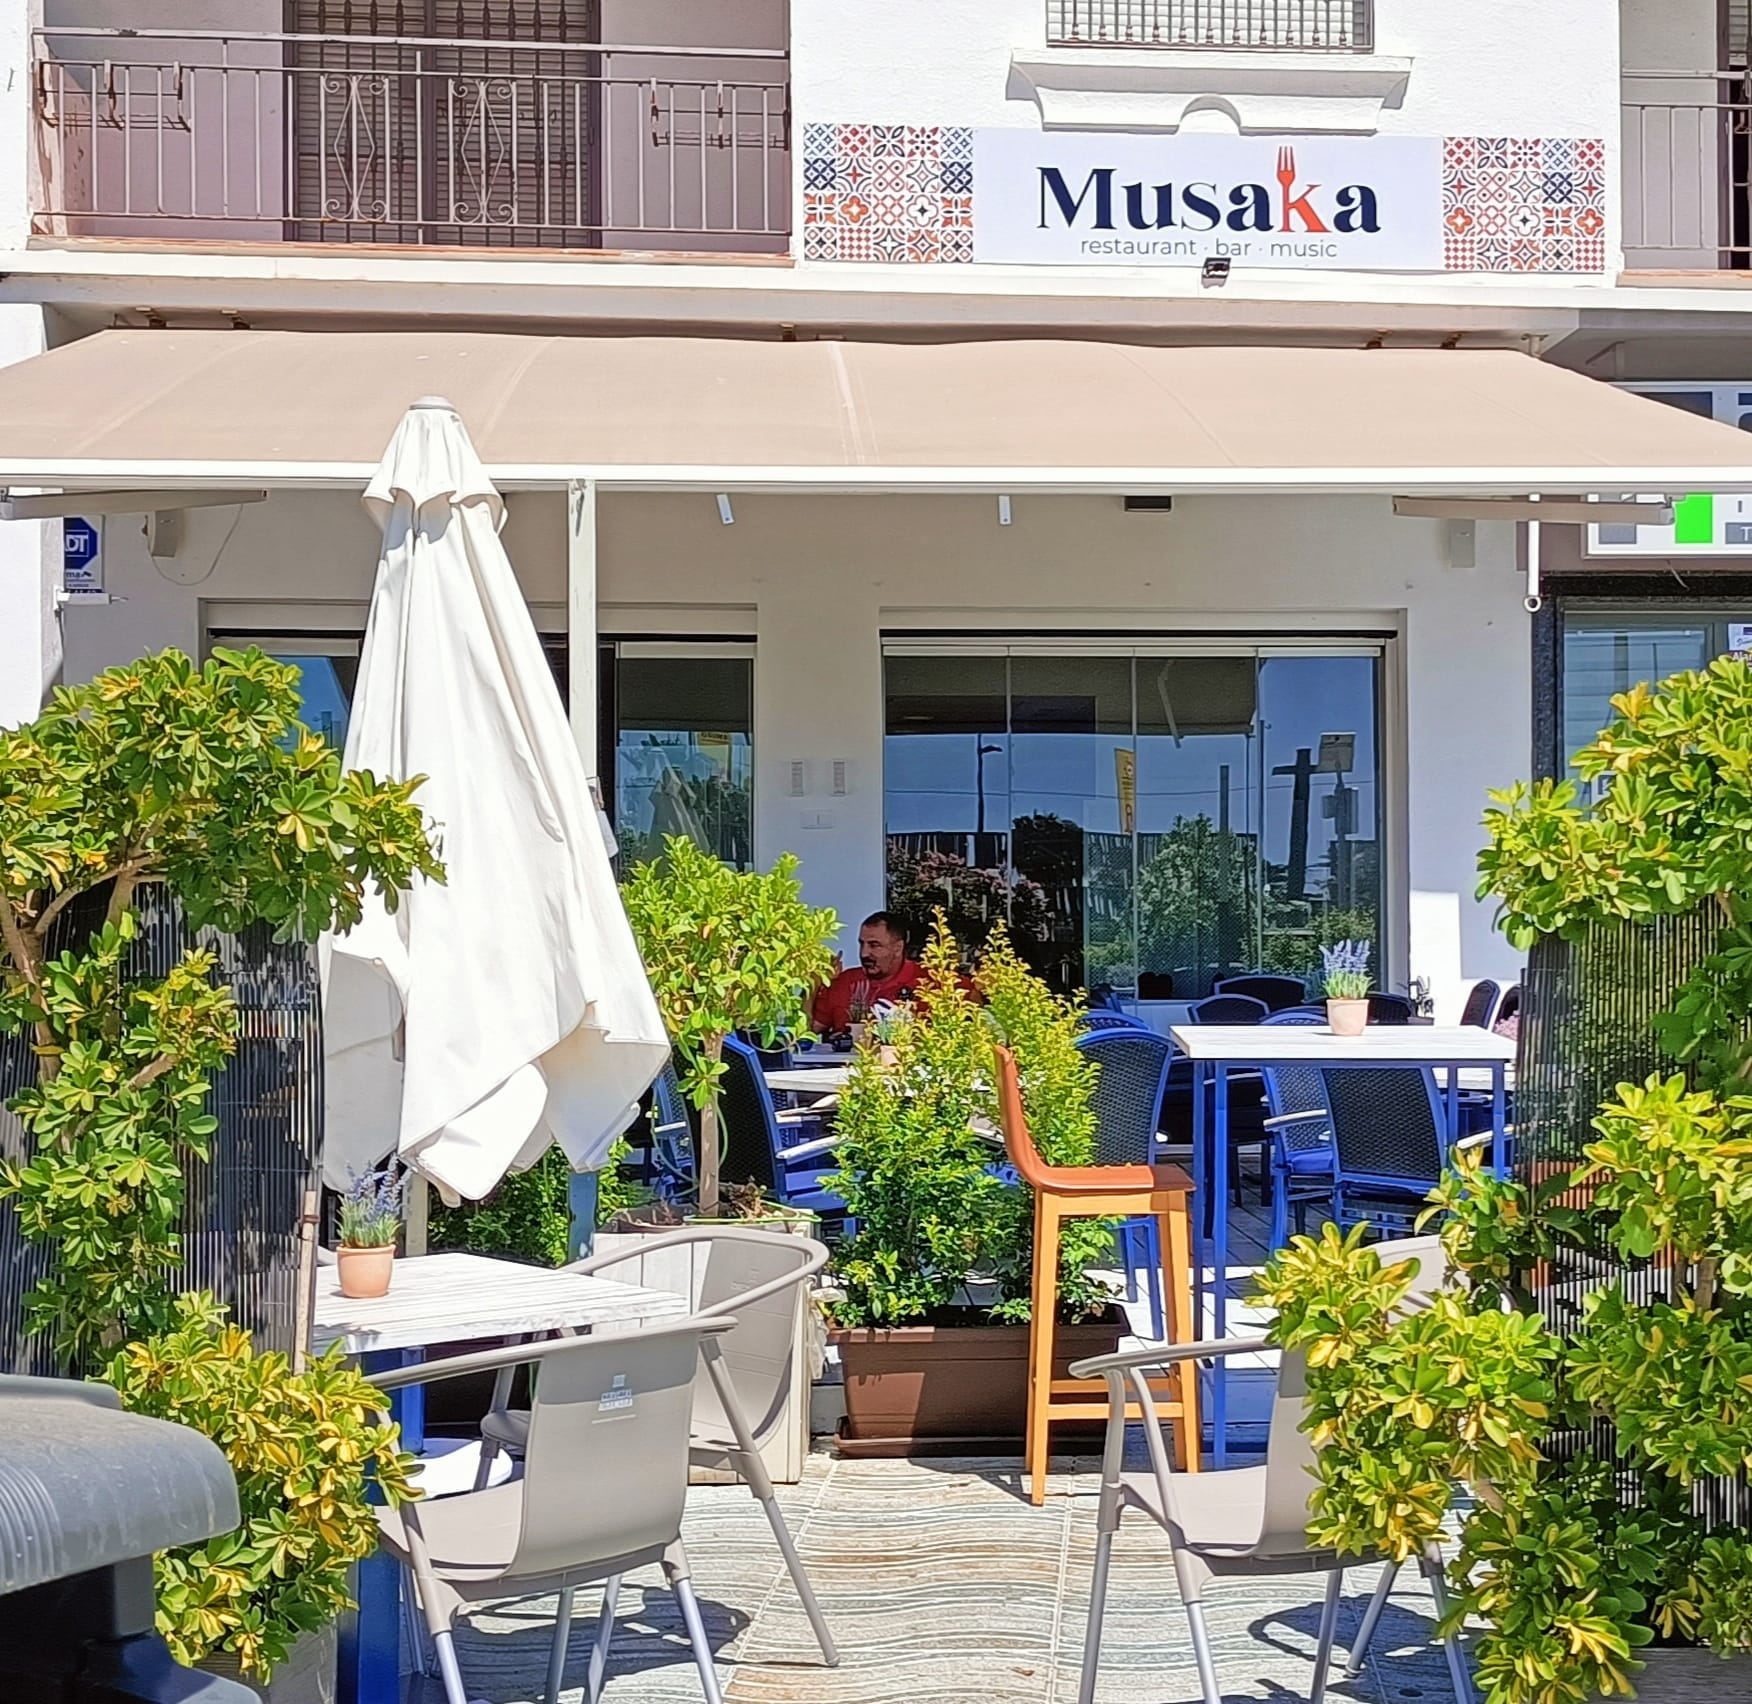 A delicious two-course menu with drink in Musaka, Greek-inspired Mediterranean restaurant in San Pedro de Alcántara.